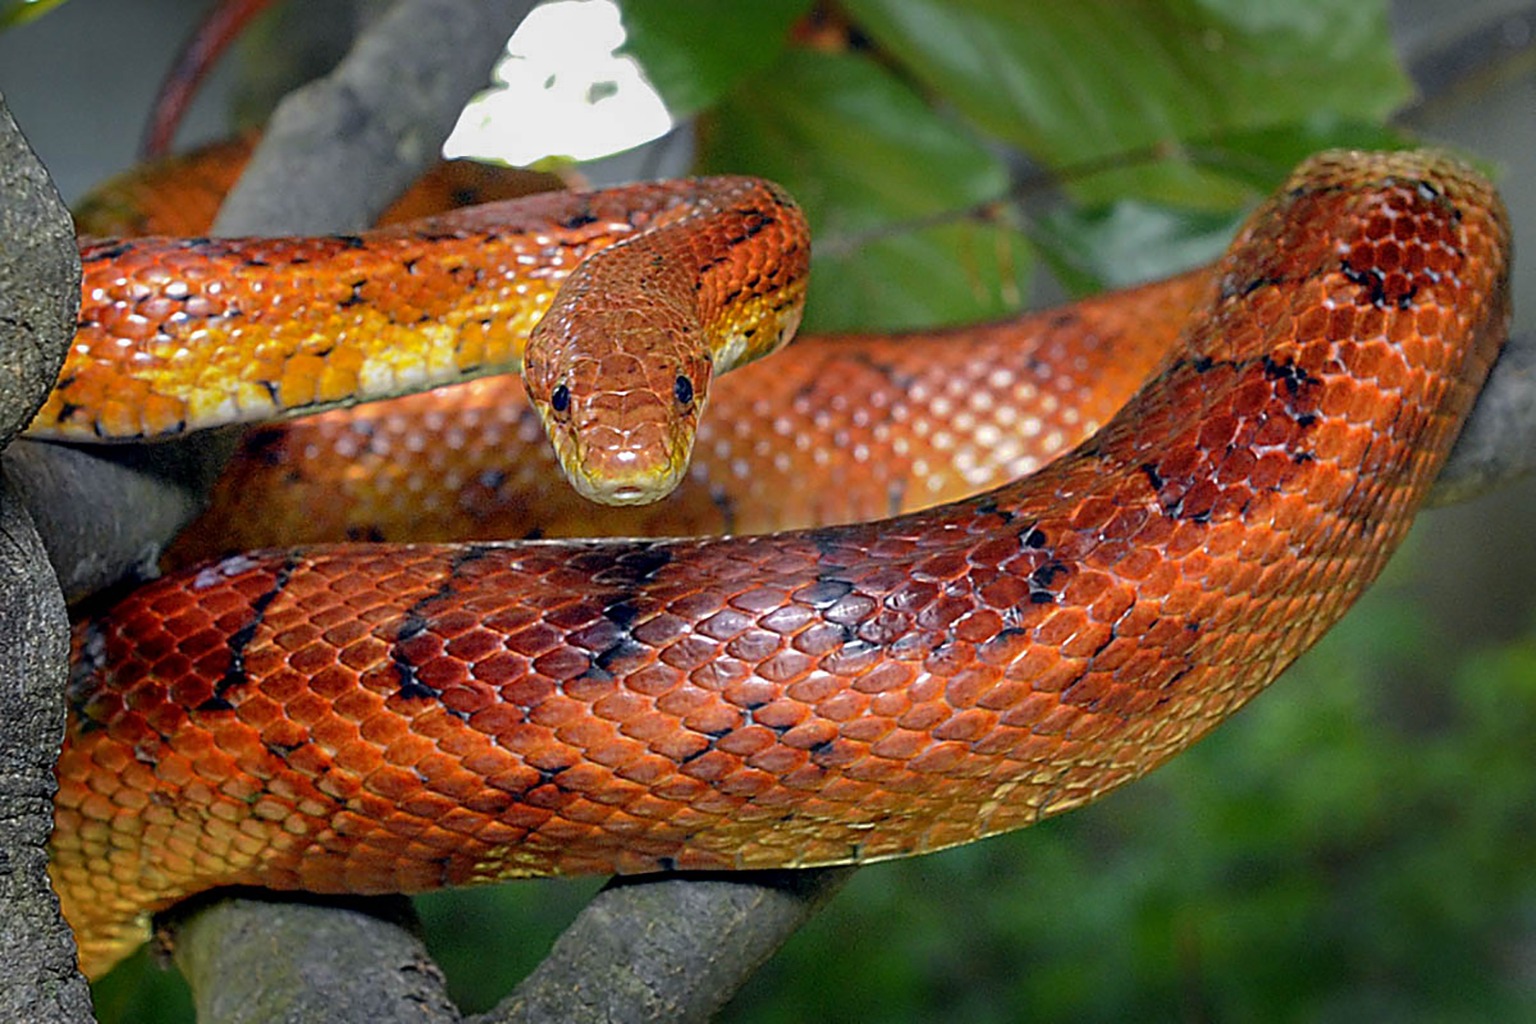 Corn Snake | The Maryland Zoo